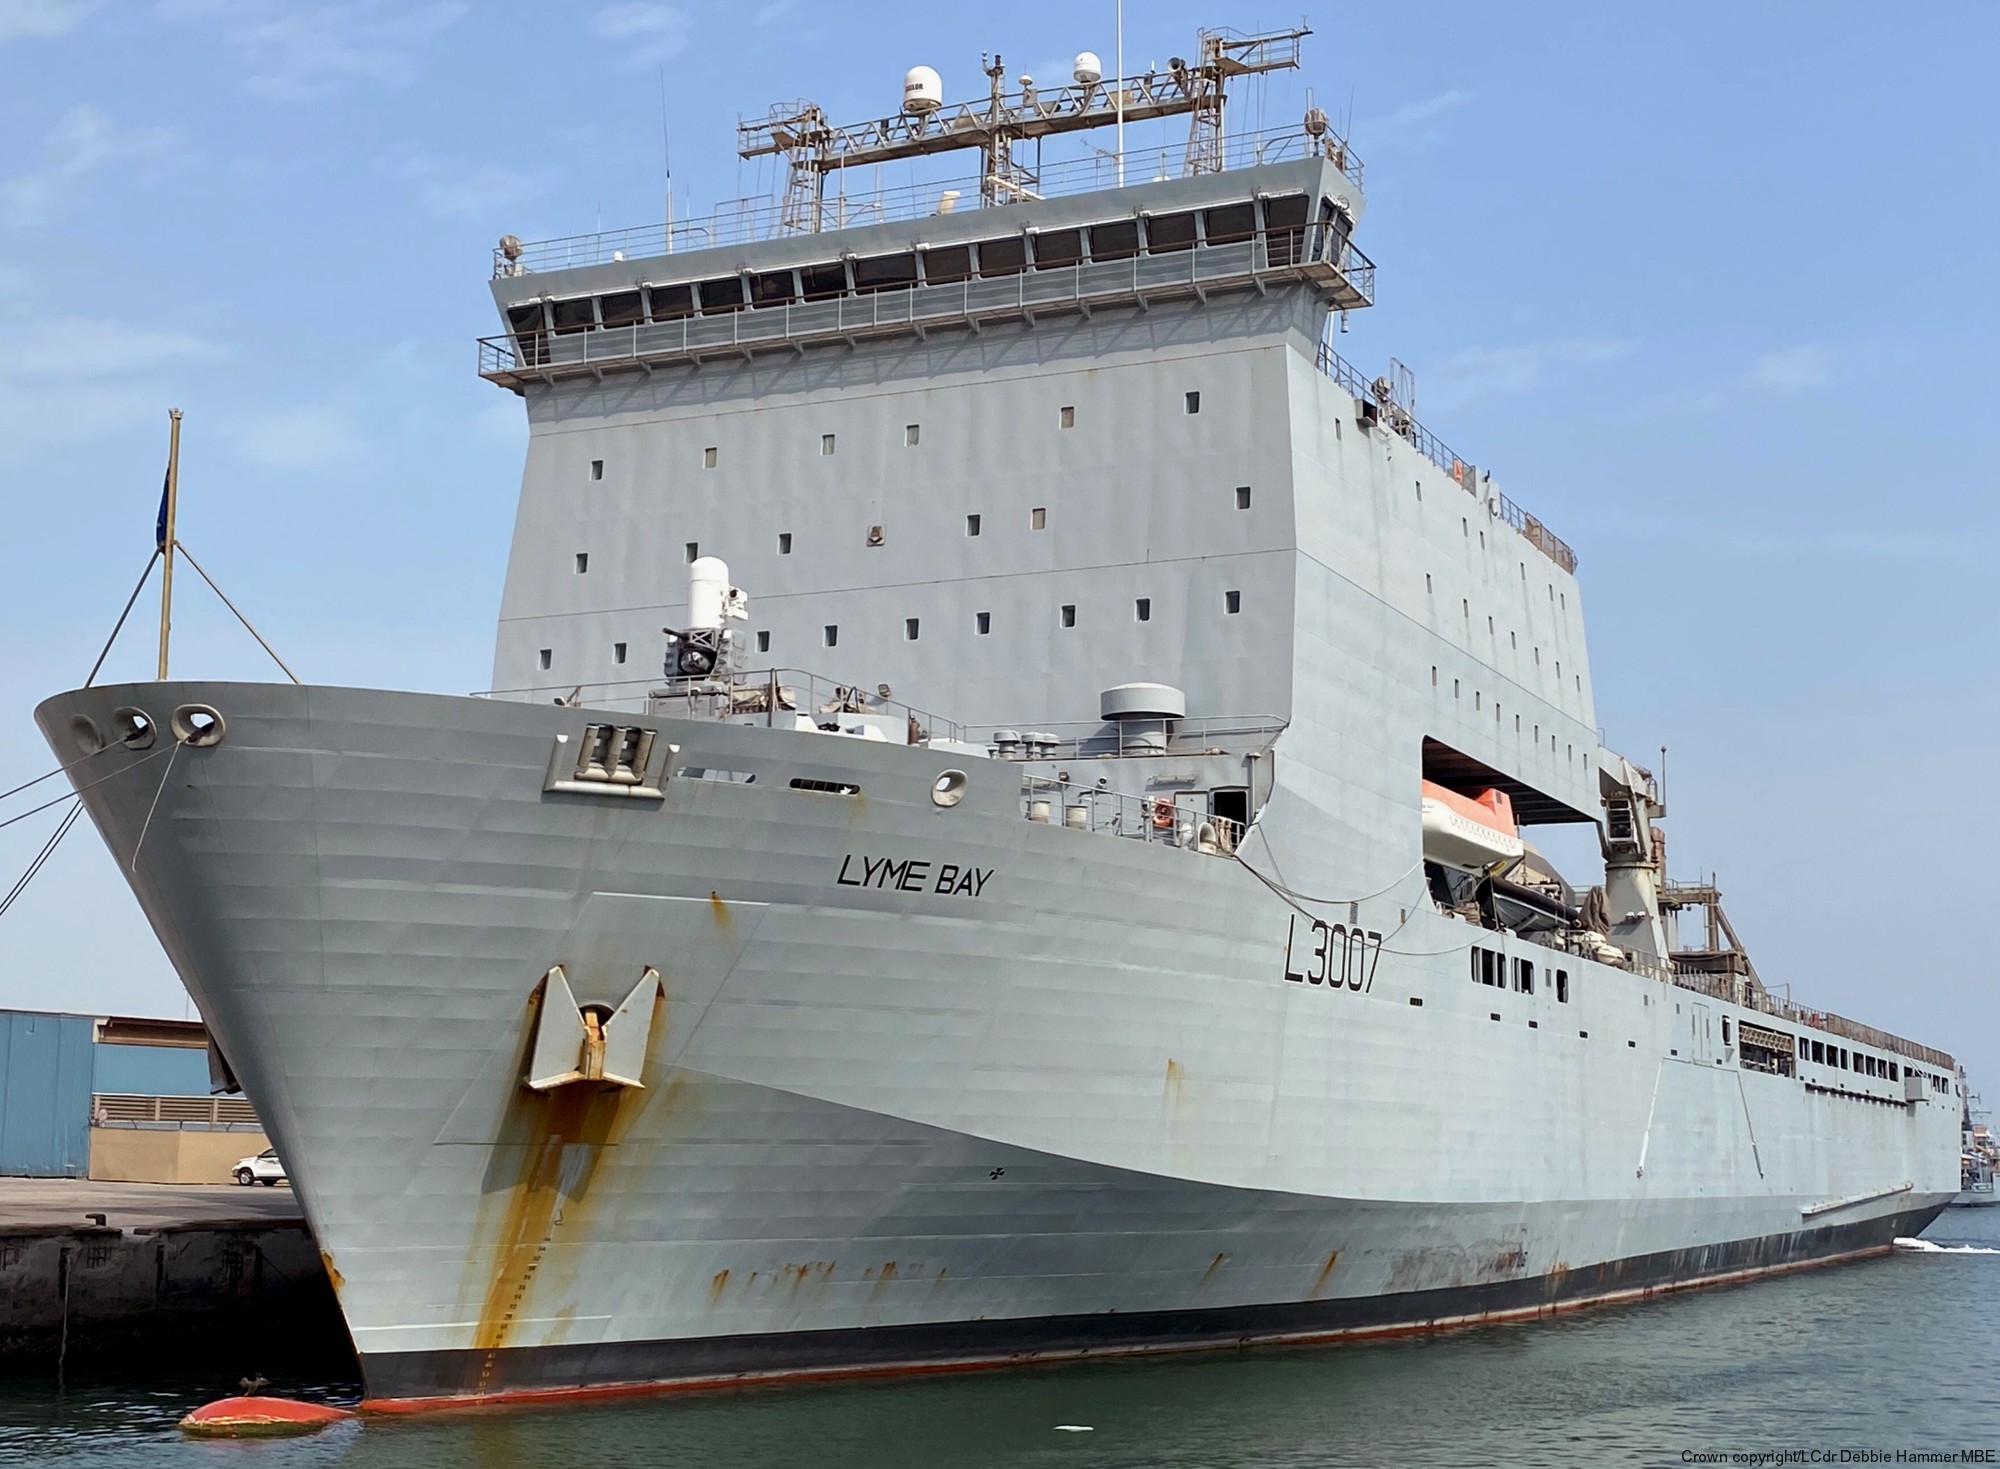 l-3007 rfa lyme bay dock landing ship royal fleet auxilary navy 31